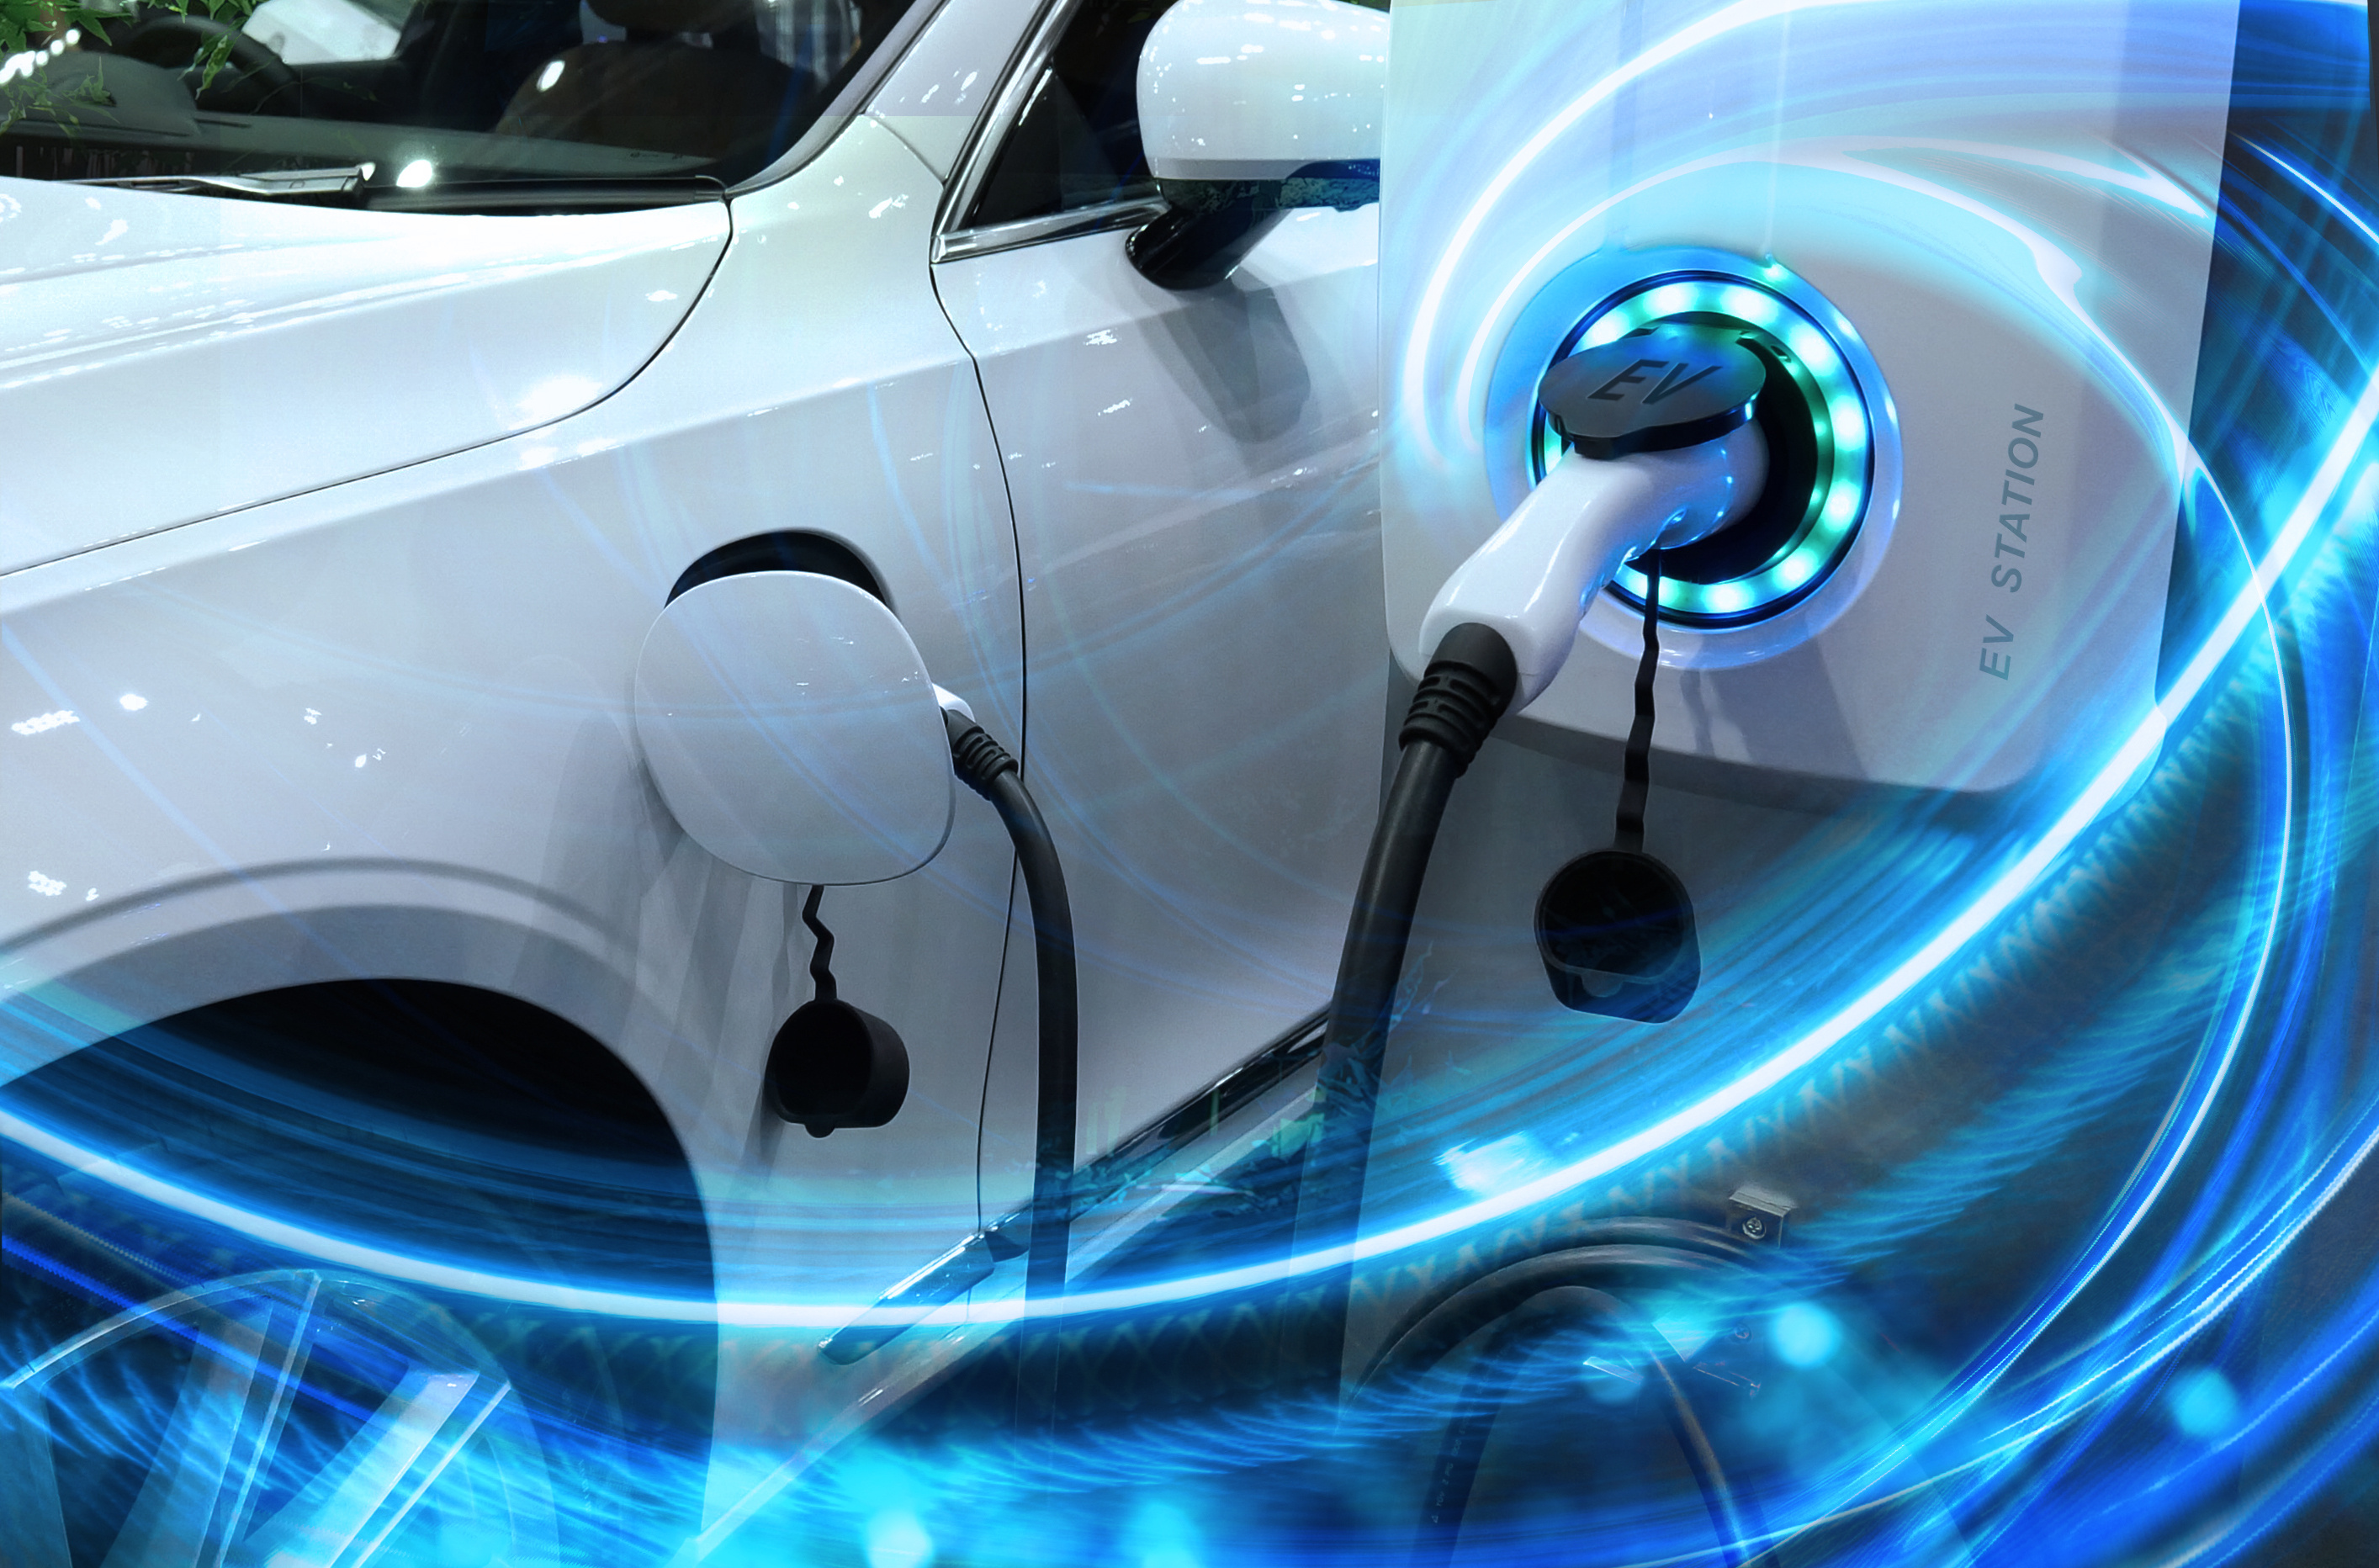 Nextgeneration electric vehicle battery technology passes safety tests